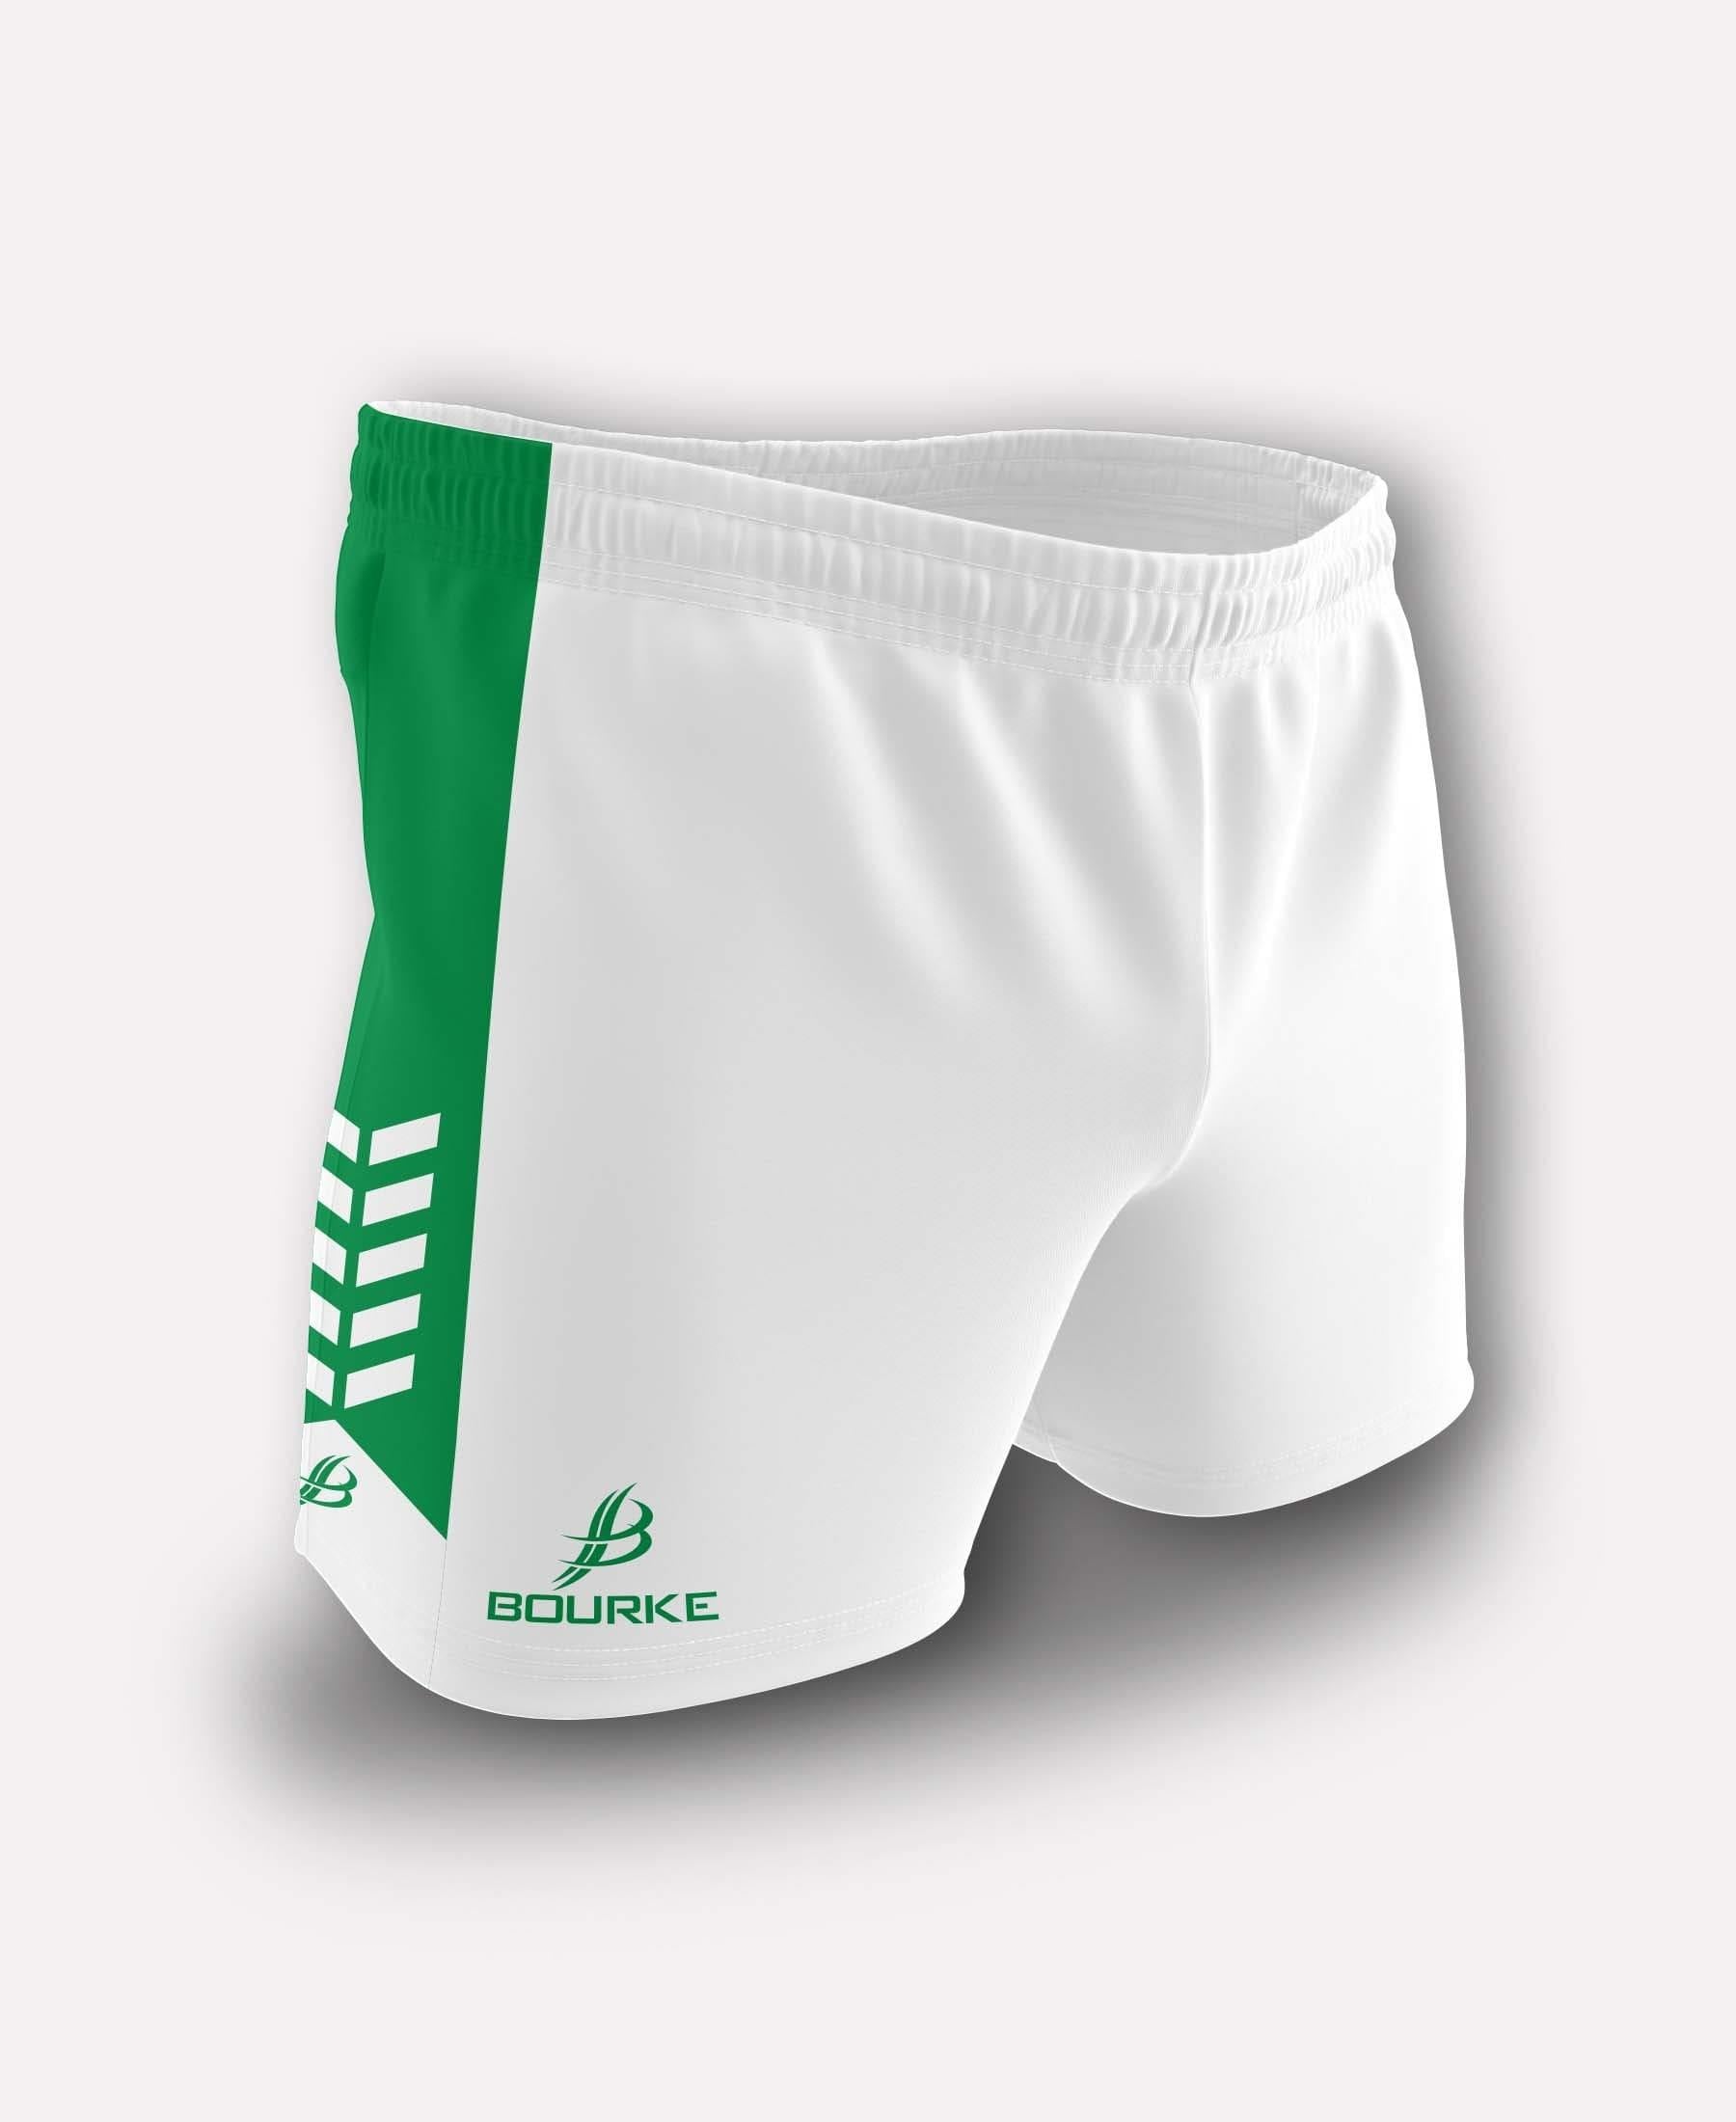 Chevron Adult Shorts (White/Green) - Bourke Sports Limited